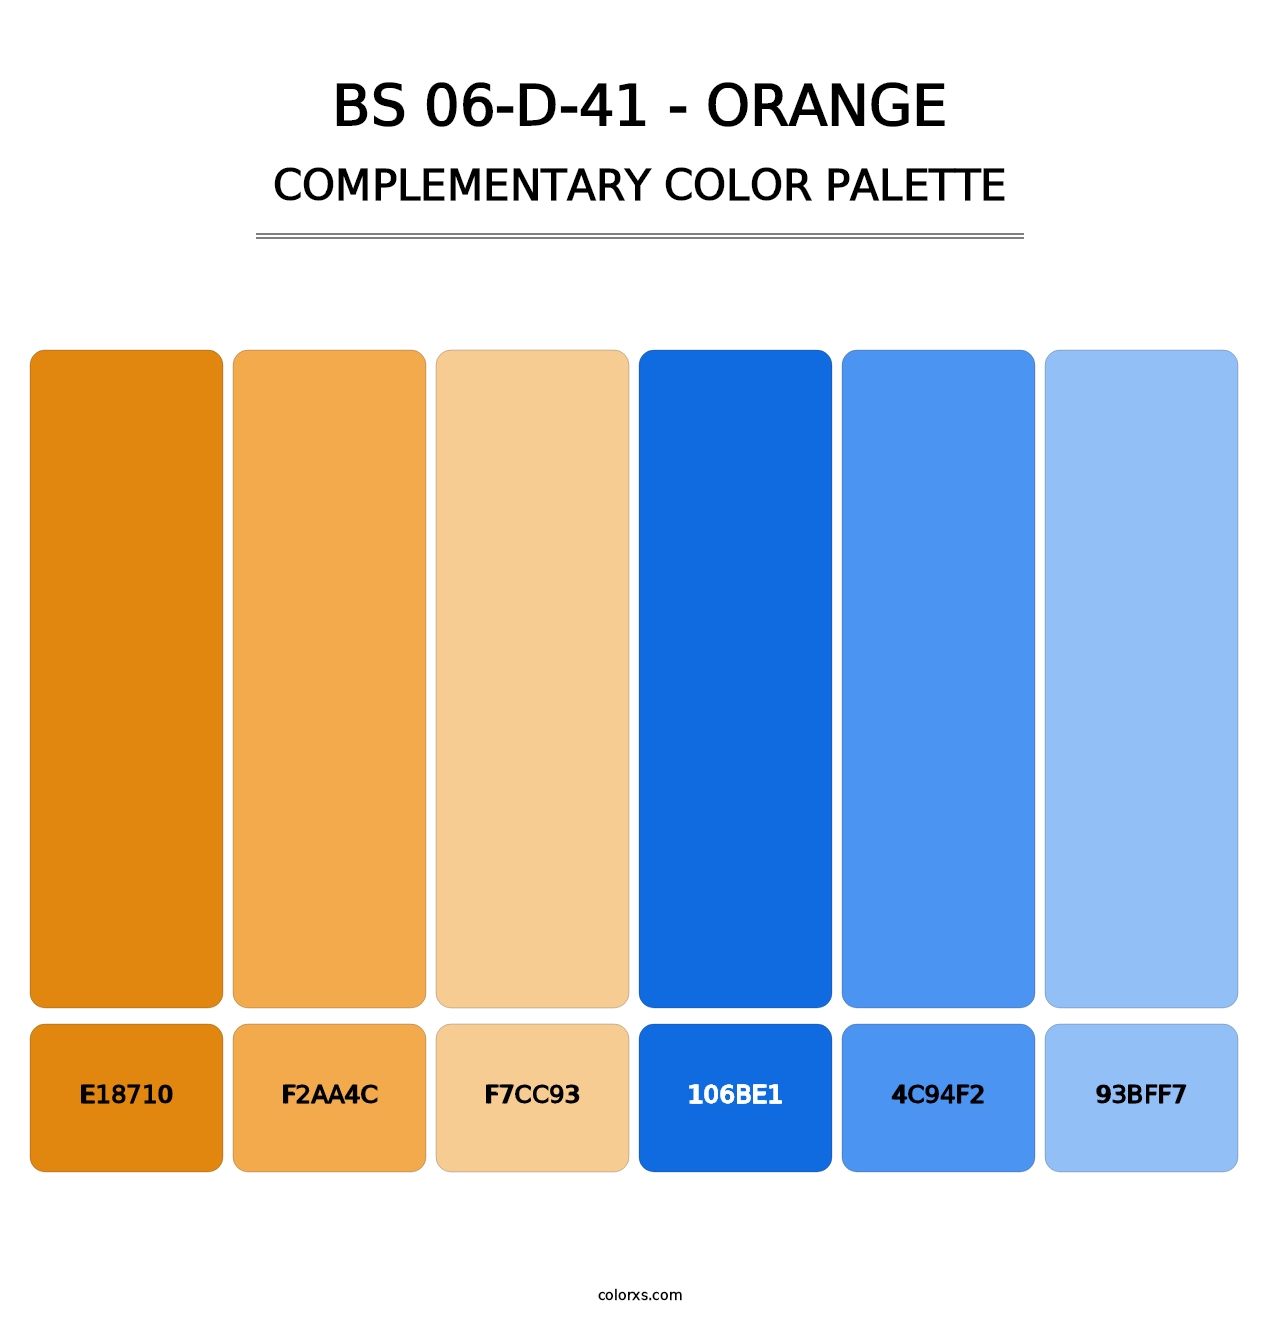 BS 06-D-41 - Orange - Complementary Color Palette